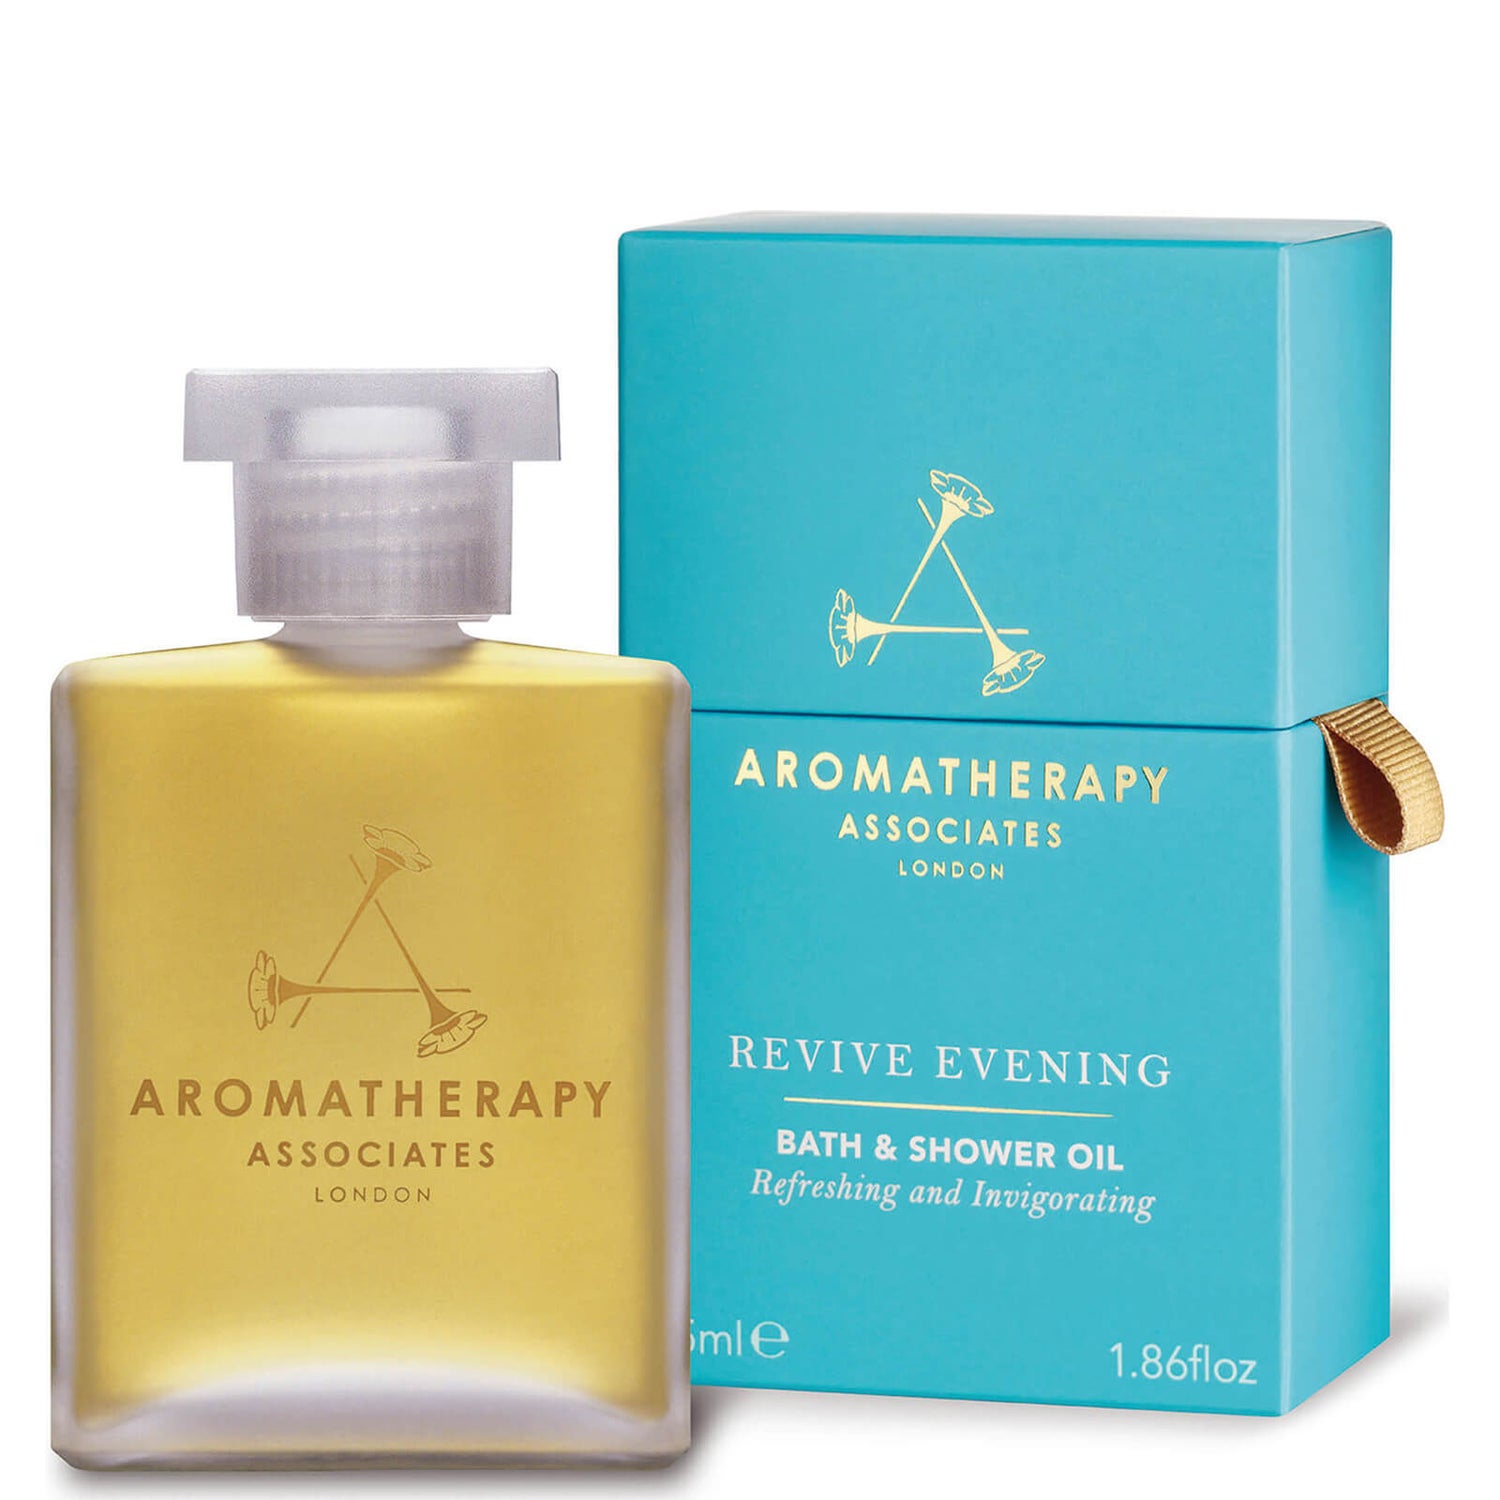 Aromatherapy Associates Revive Evening Bath & Shower Oil(아로마테라피 어소시에이트 리바이브 이브닝 배스 & 샤워 오일 55ml)